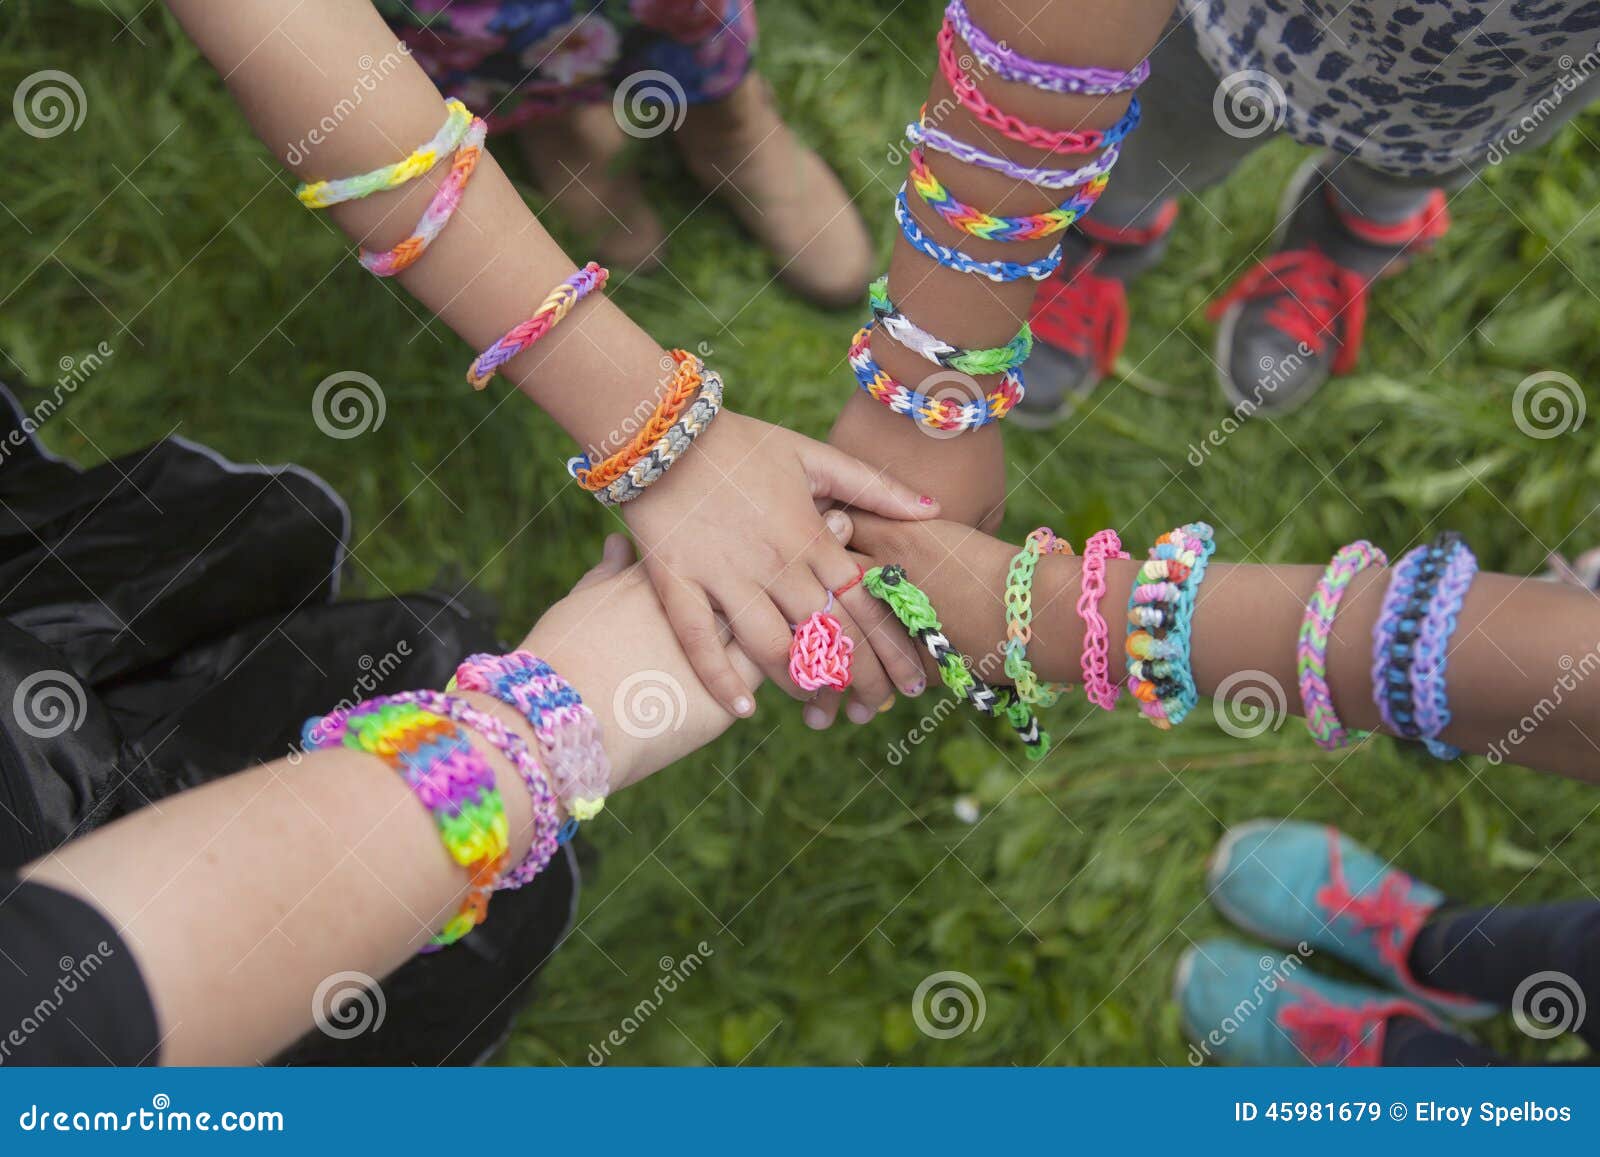 Make friendship bracelets kids hi-res stock photography and images - Alamy